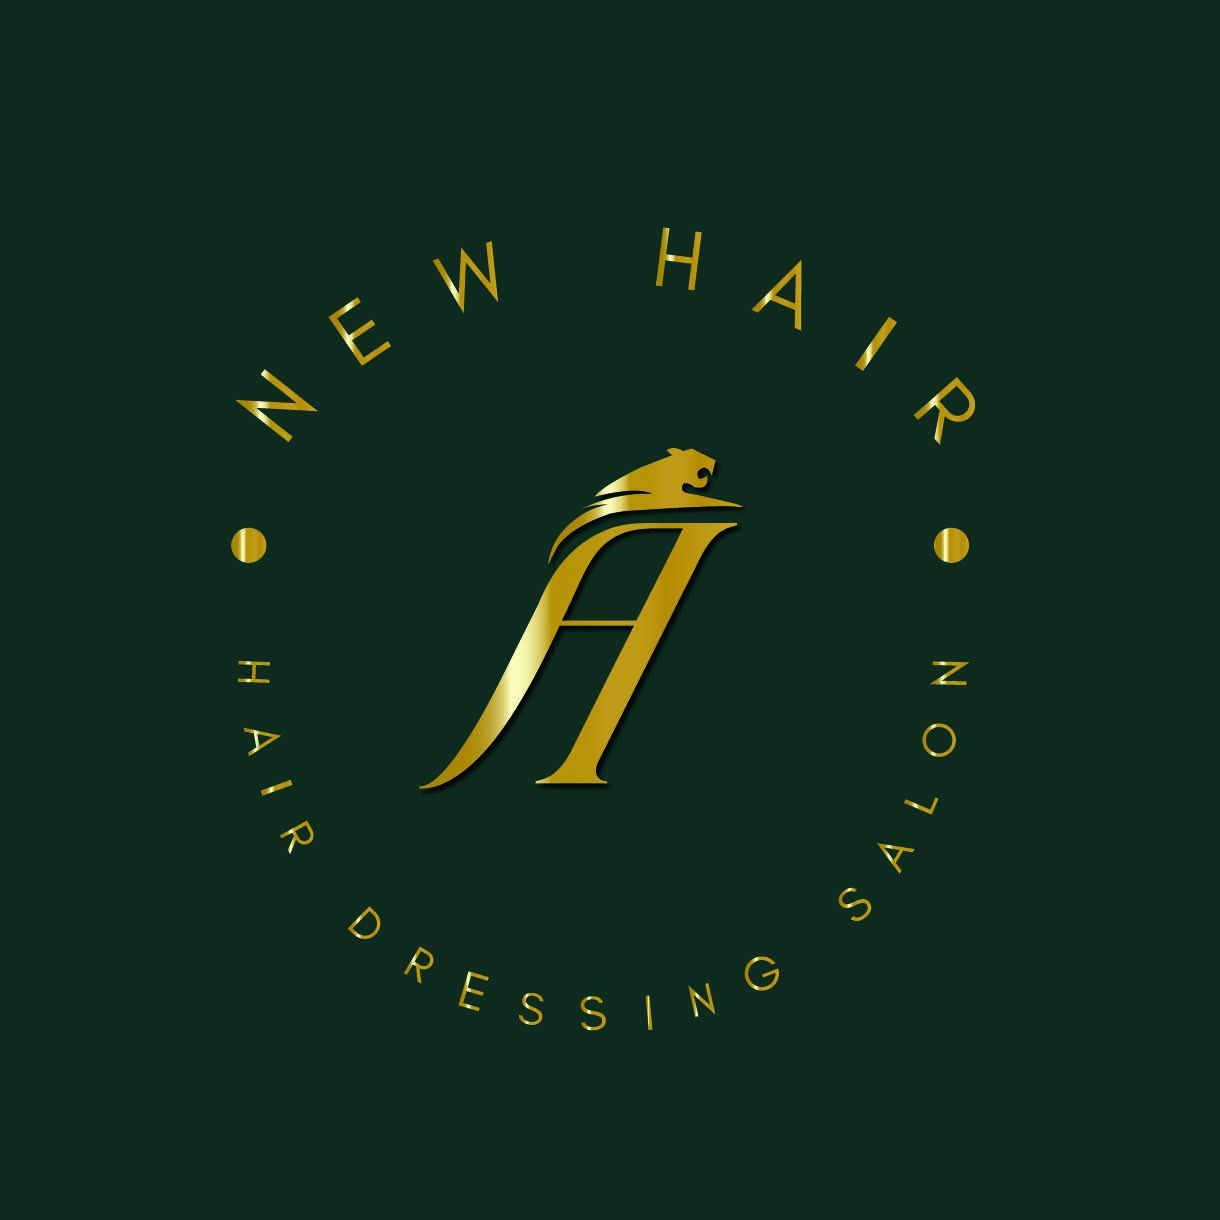 New Hair’A, 8 rue des Allamandiers, 33800, Bordeaux